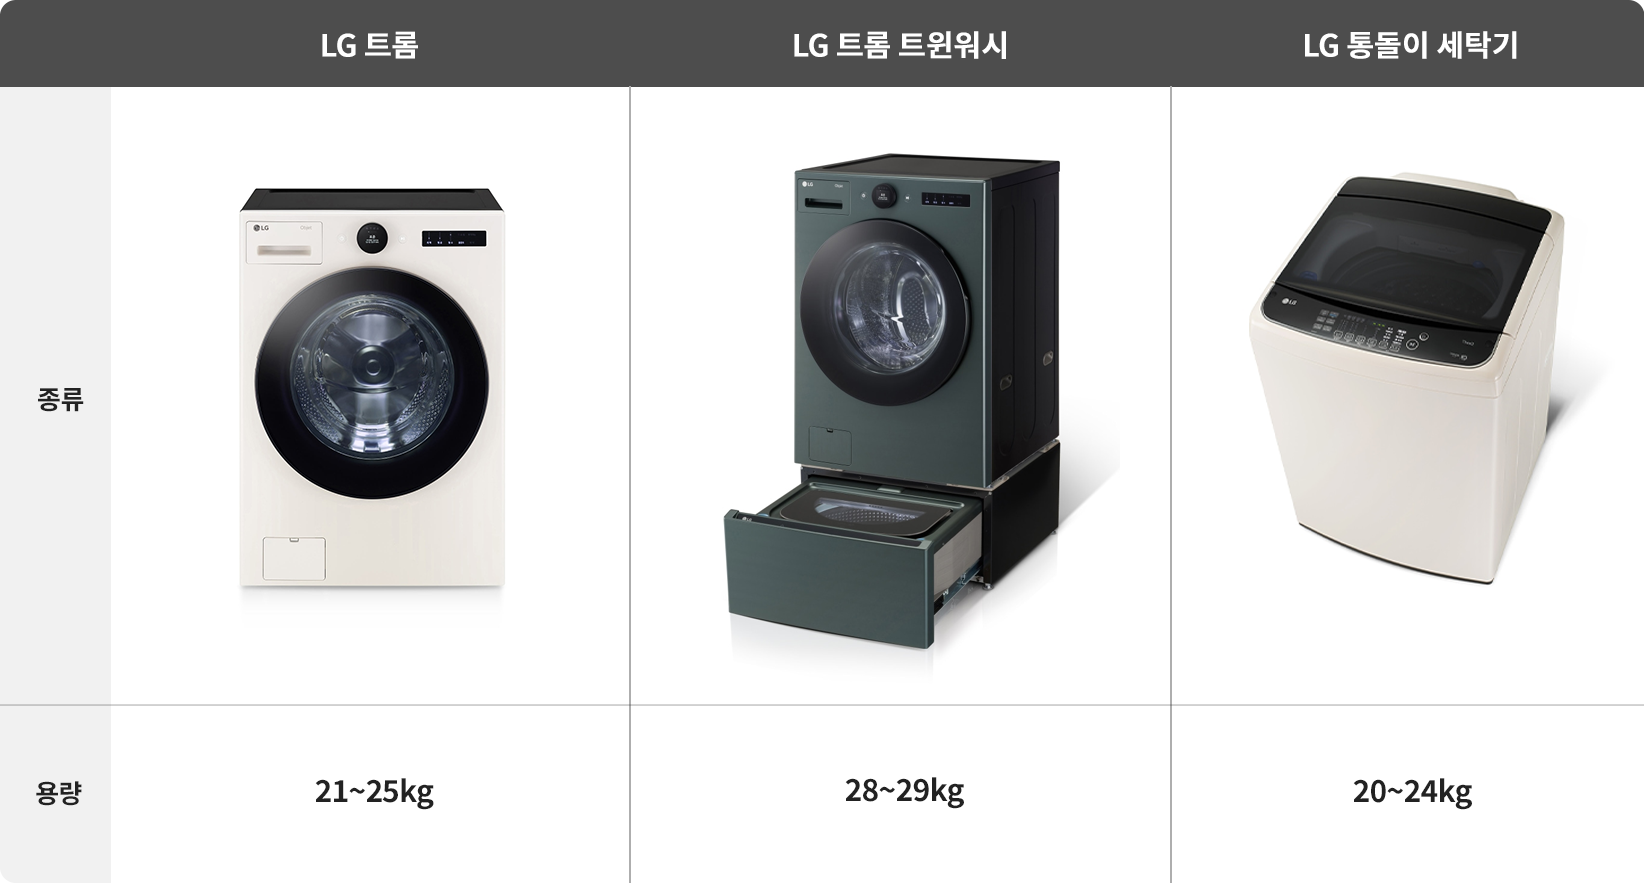 LG트롬 21 ~ 25kg vs LG 트롬 트윈워시 28~29kg vs LG 통돌이 세탁기 20 ~ 24kg